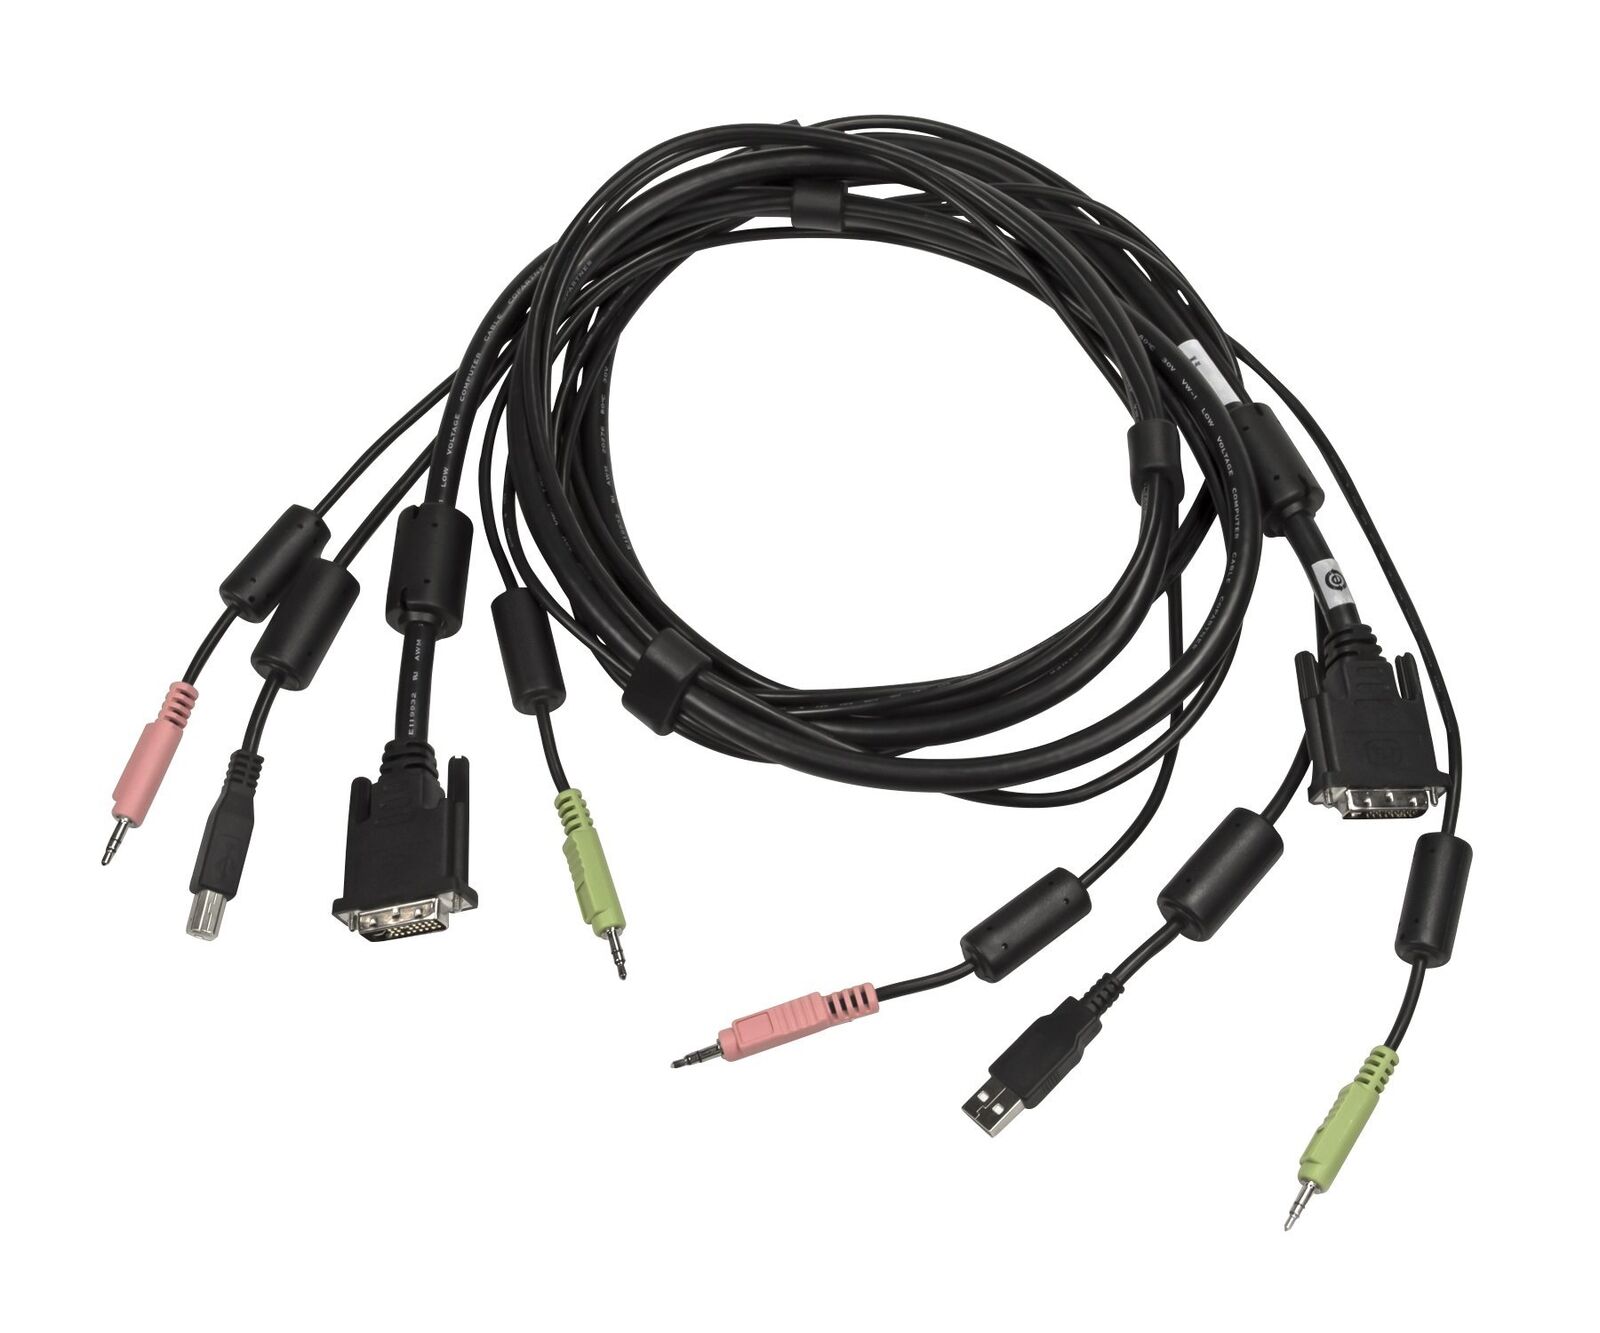 Avocent Kvm Cable - For Keyboard/mouse, Kvm Switch - 6 Ft - 1 X Dvi-i Video, 1 X